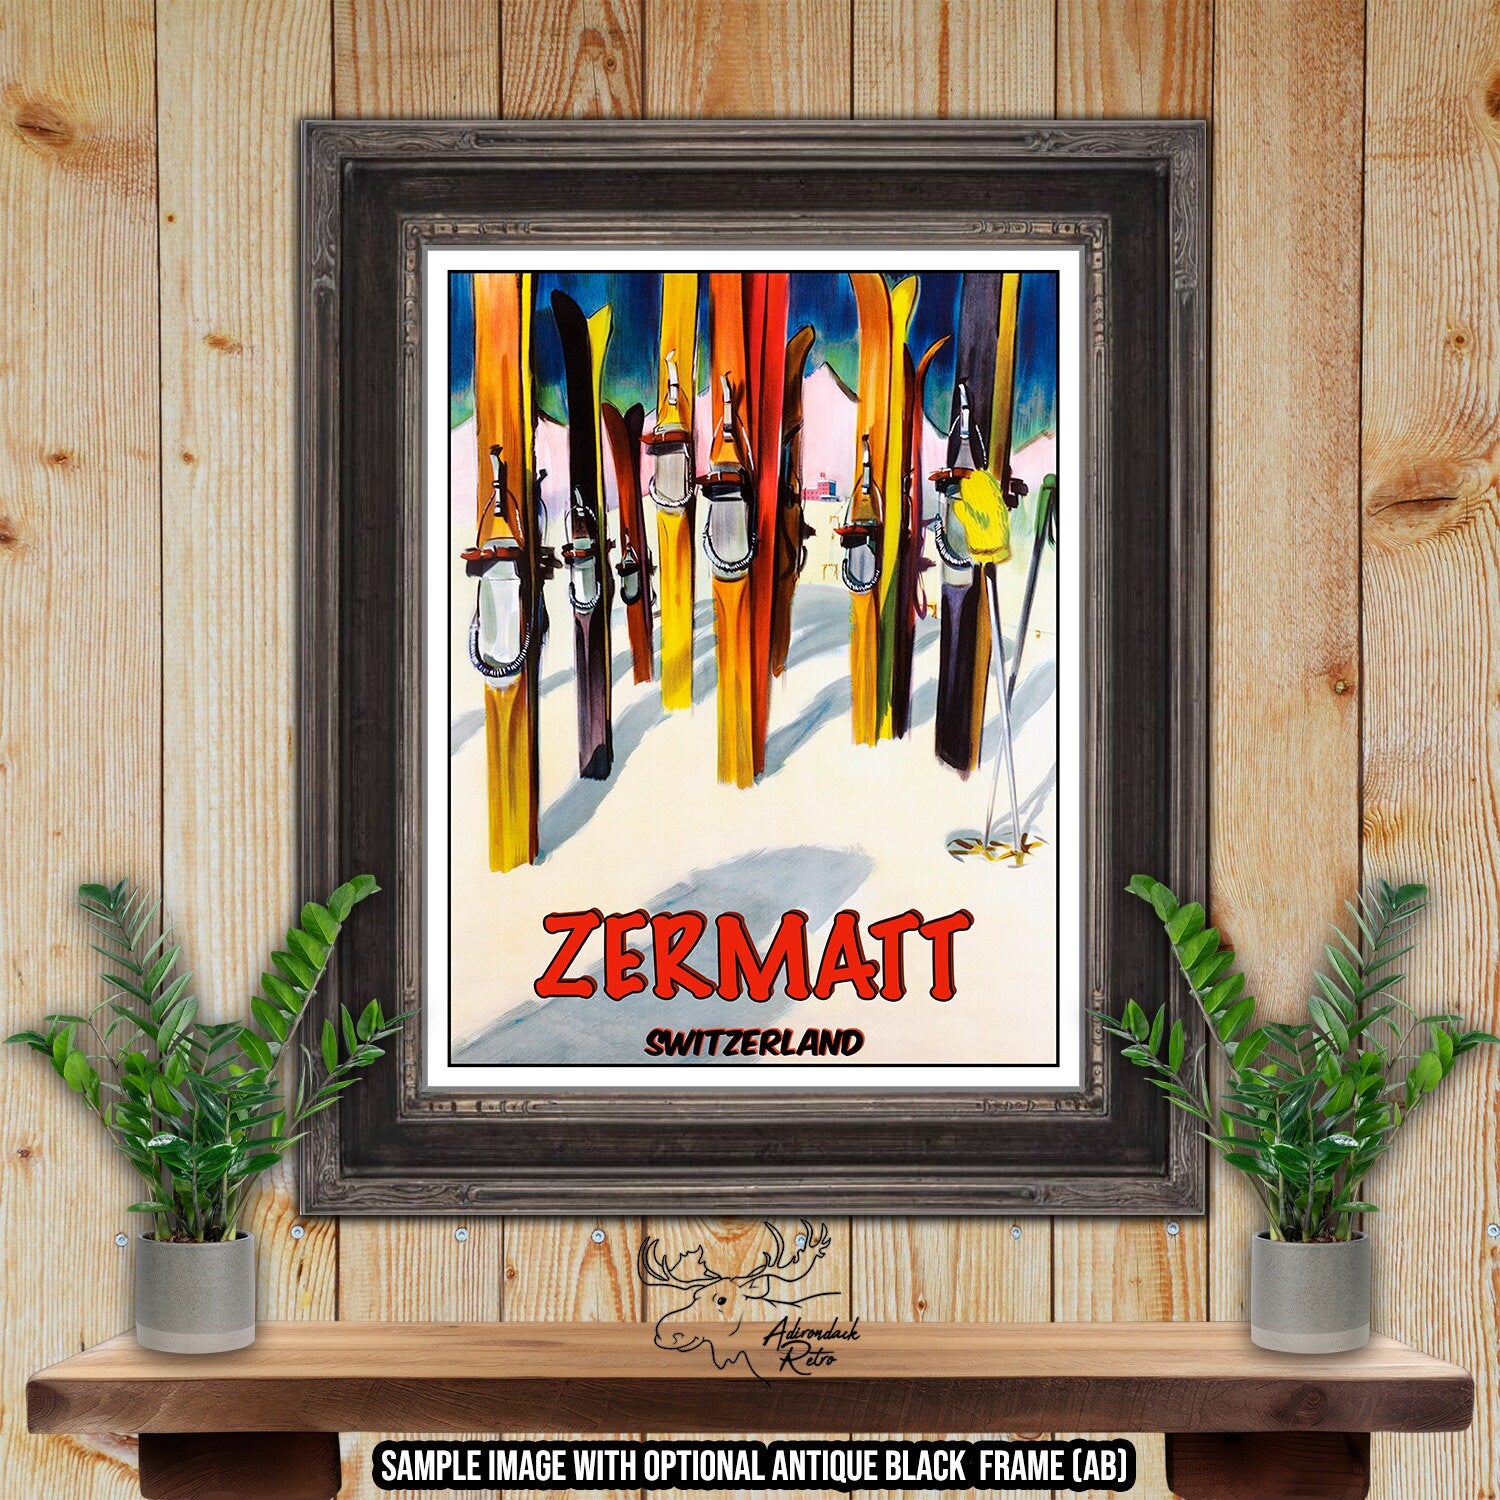 Zermatt Ski Resort Print - Retro Switzerland Ski Resort Poster at Adirondack Retro